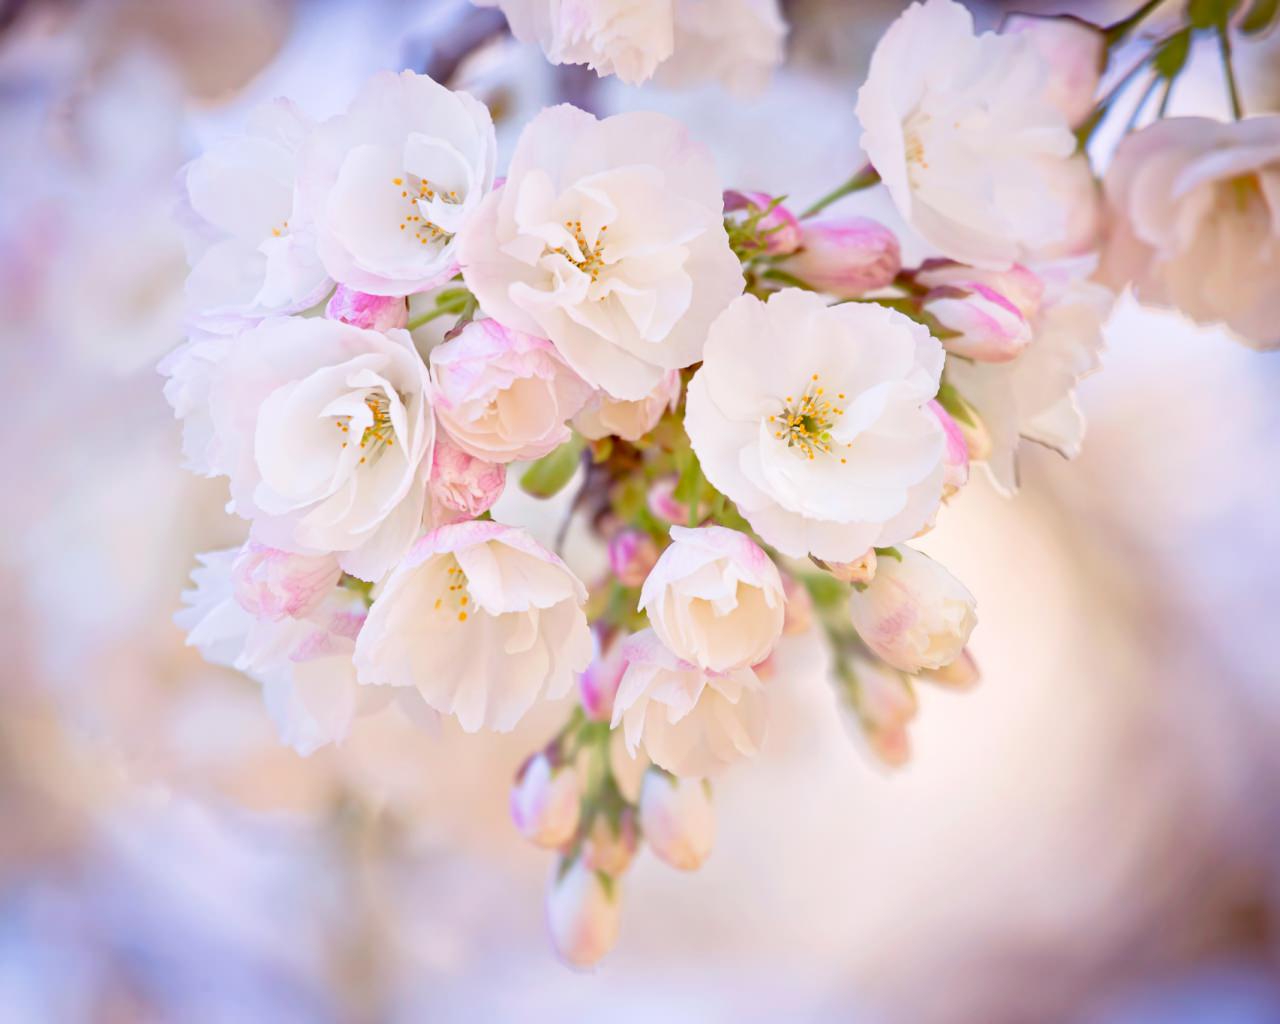 elegant white flowers, spring wallpapers free download, floral